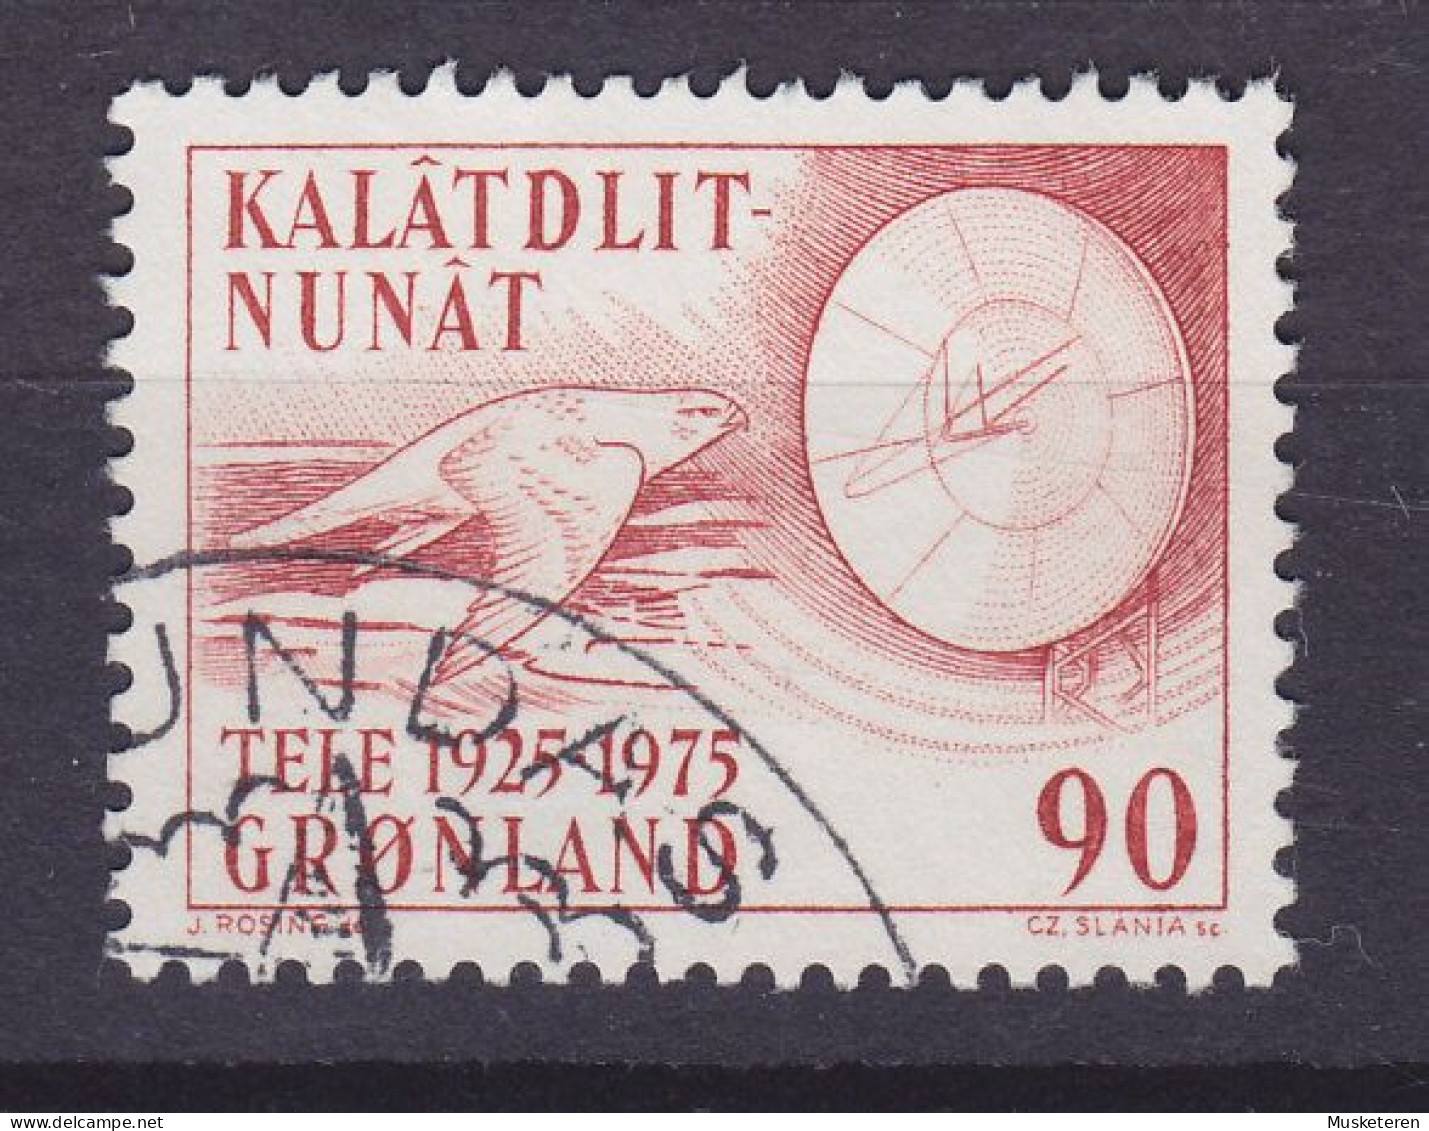 Greenland 1975 Mi. 94, 90 (Ø) Telekommunikation Bird Vogel Oiseau Gerfalke Parabolantenne (Cz. Slania) - Gebraucht